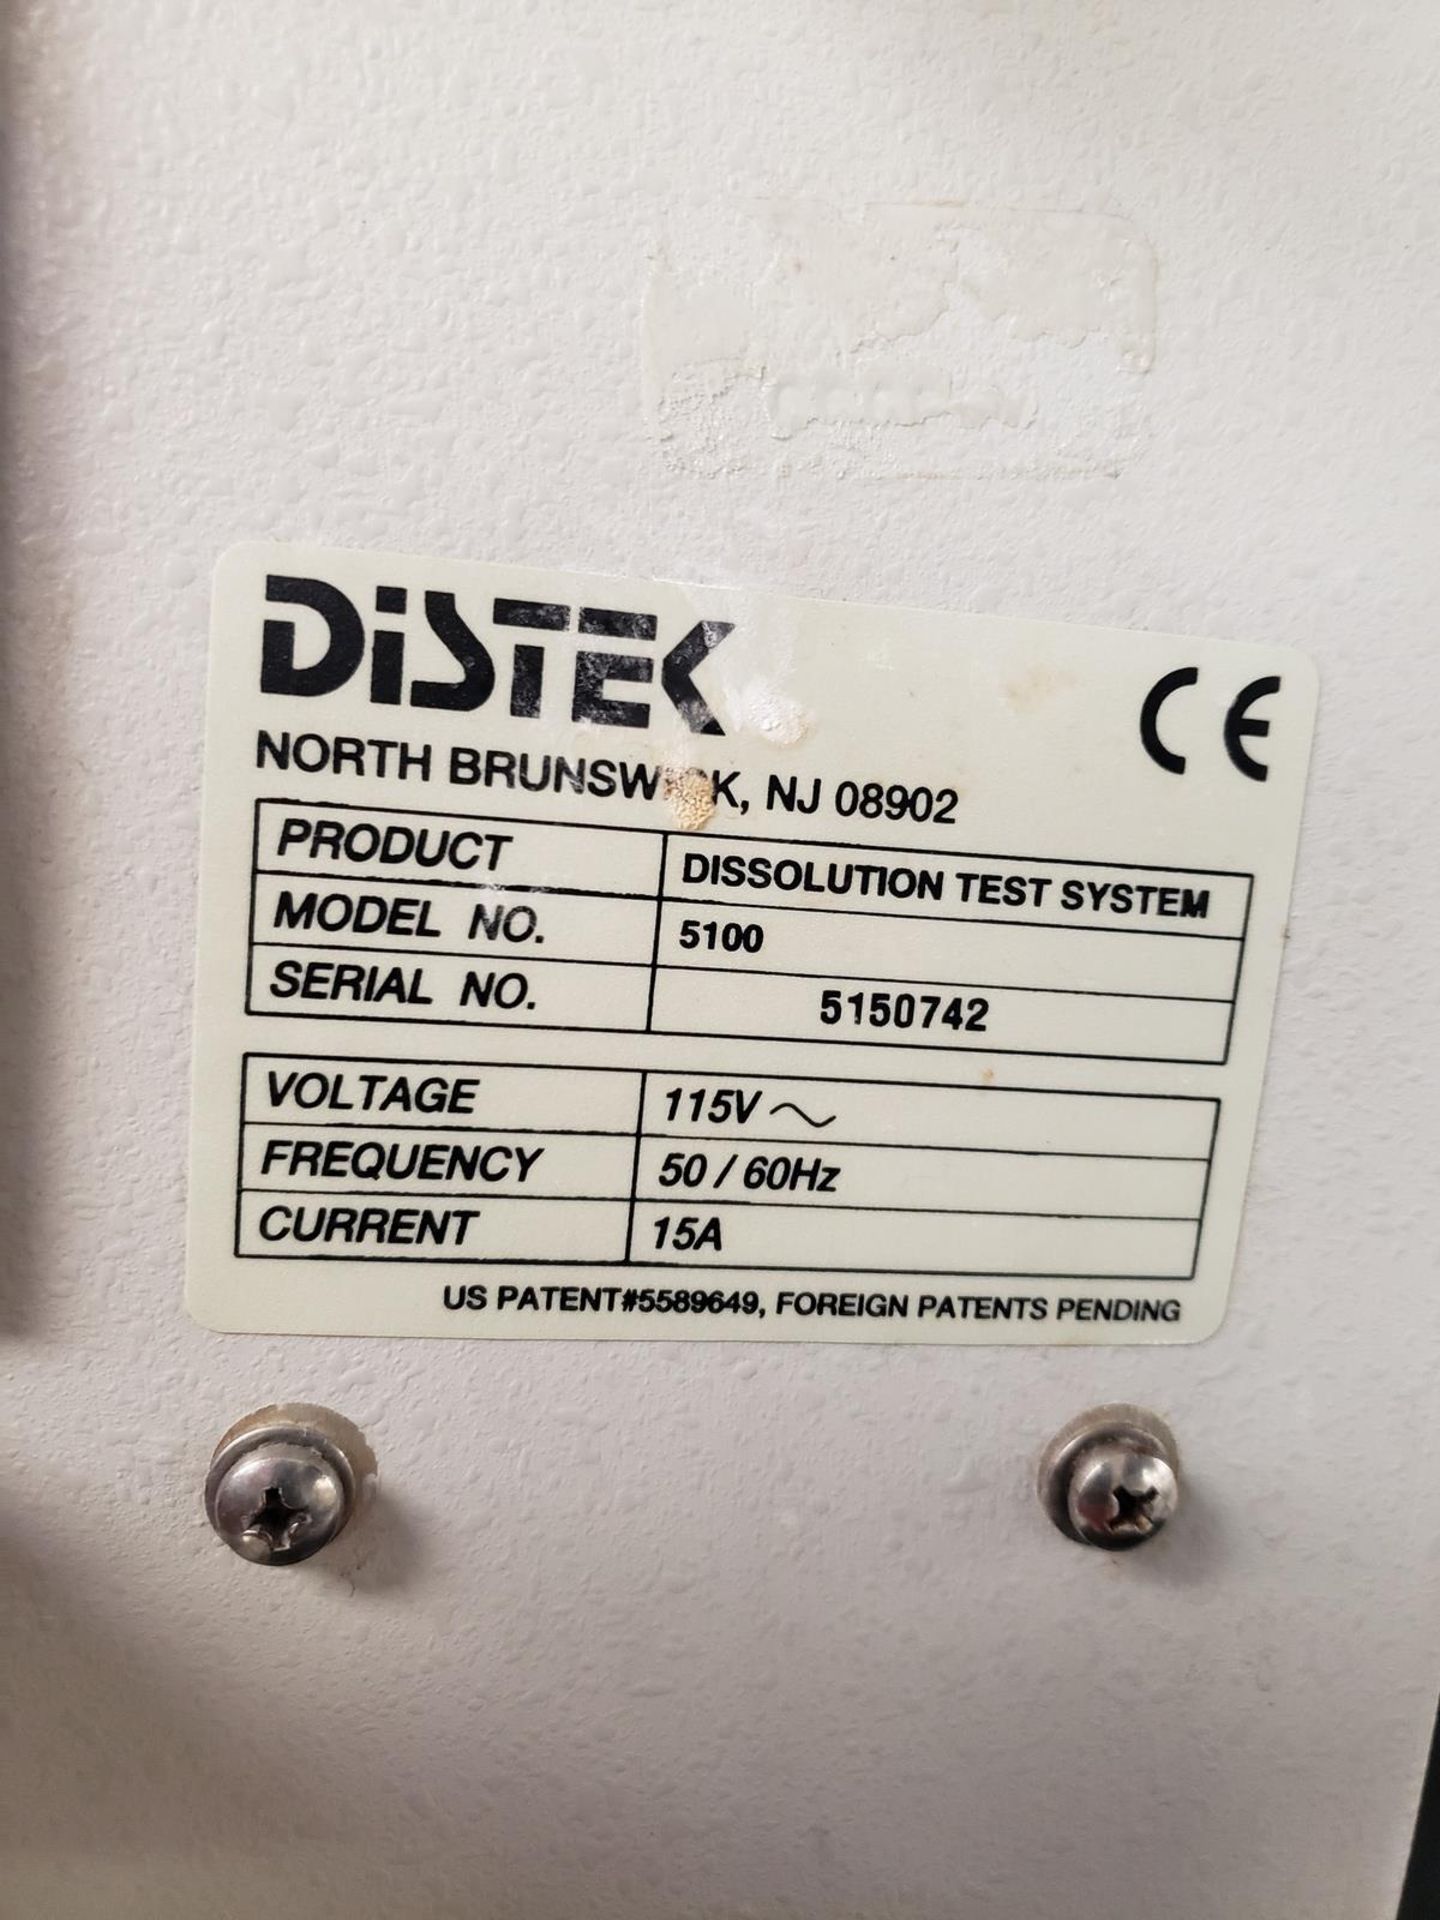 Distek Premiere 5100 Dissolution System, M# 5100, S/N 5150742 | Rig Fee $200 - Image 2 of 3